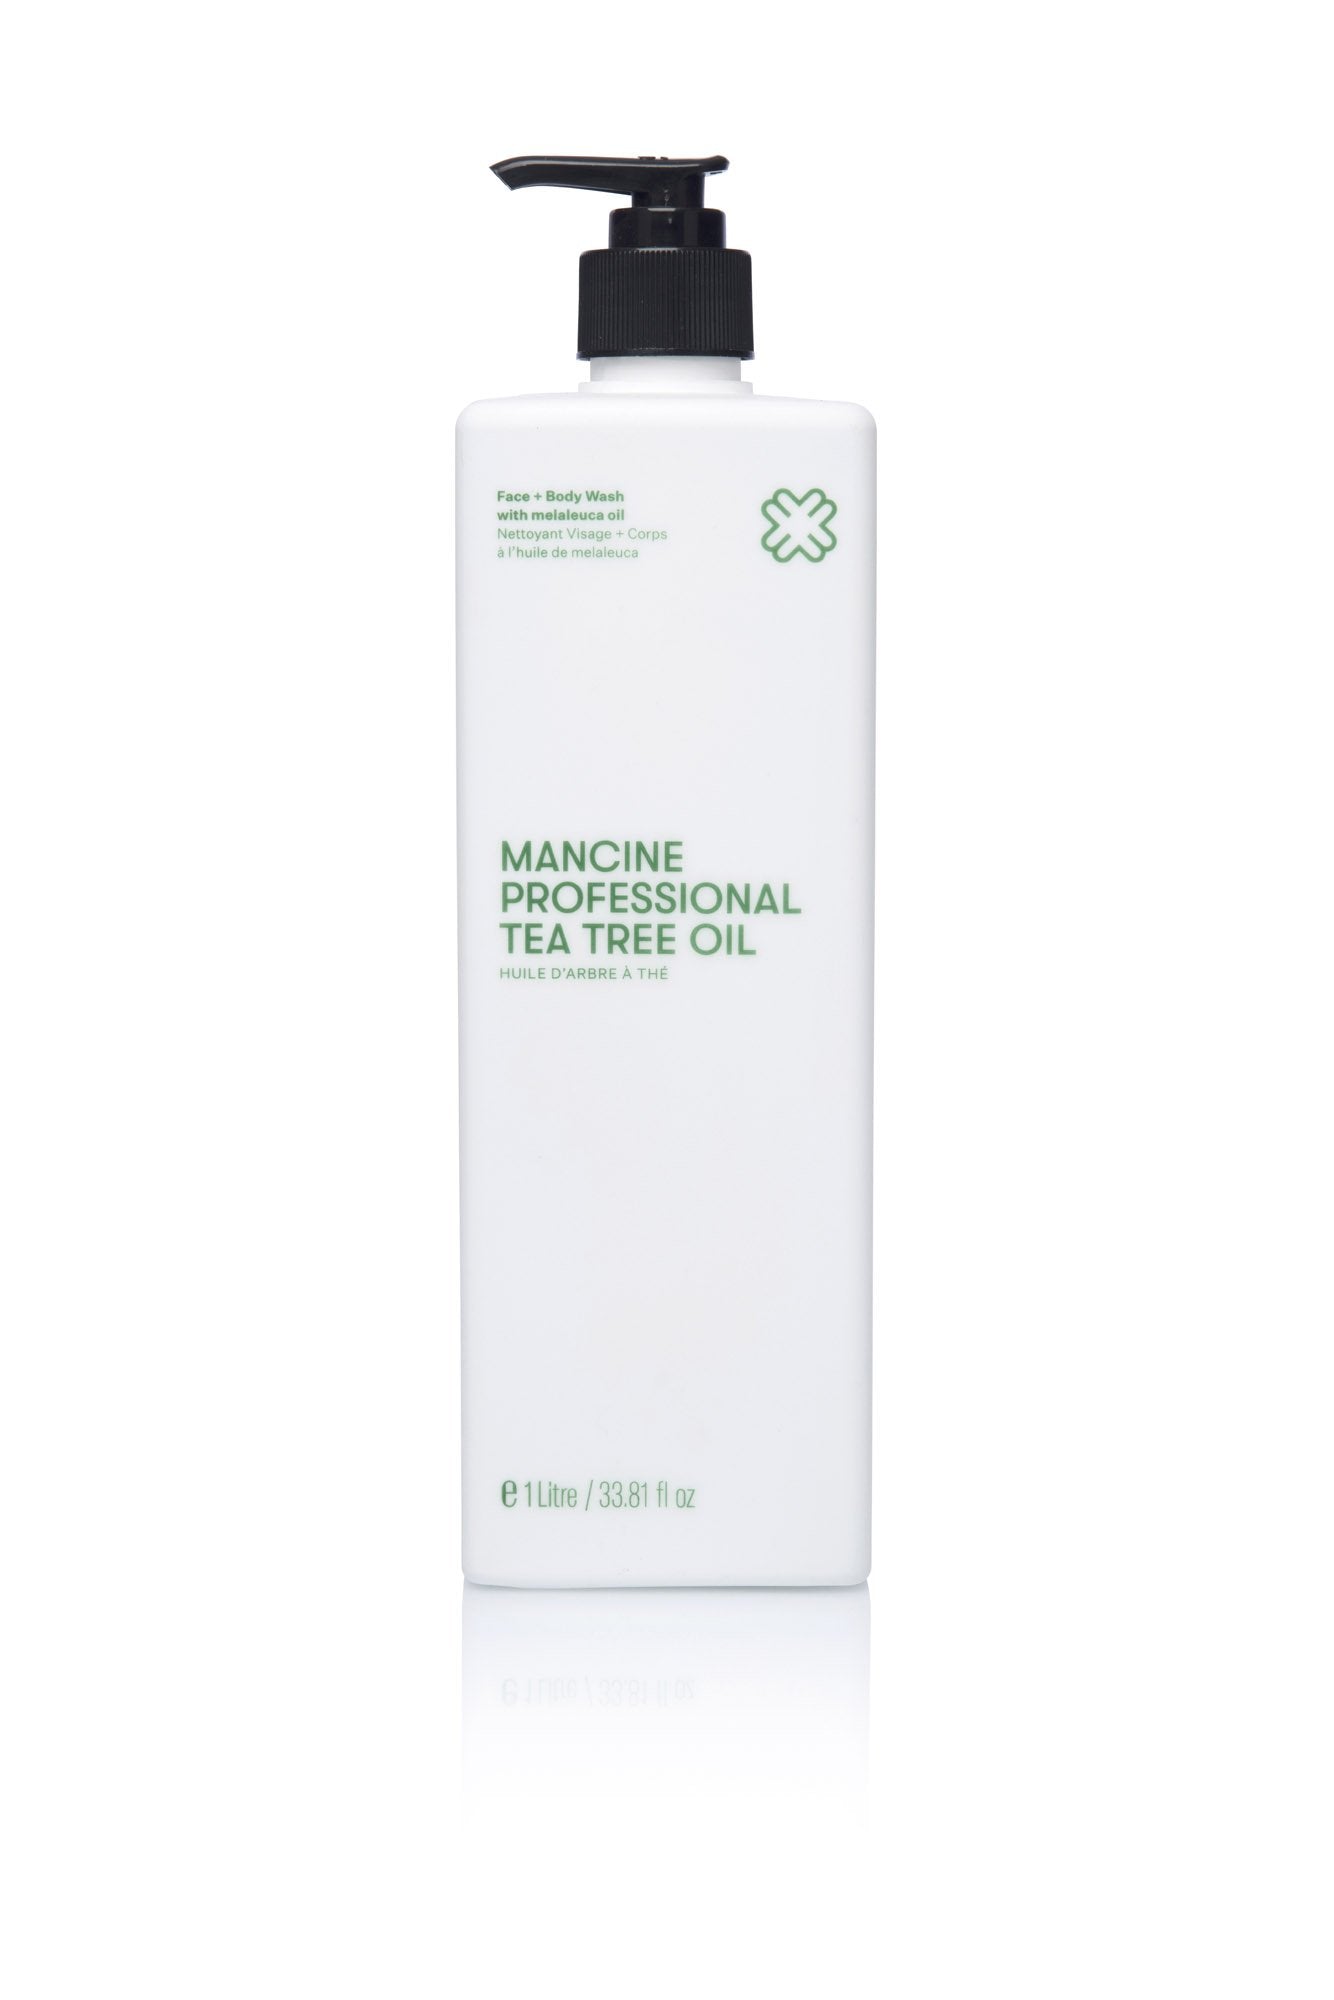 Mancine Tea Tree Face & Body Wash 2% 1 litre